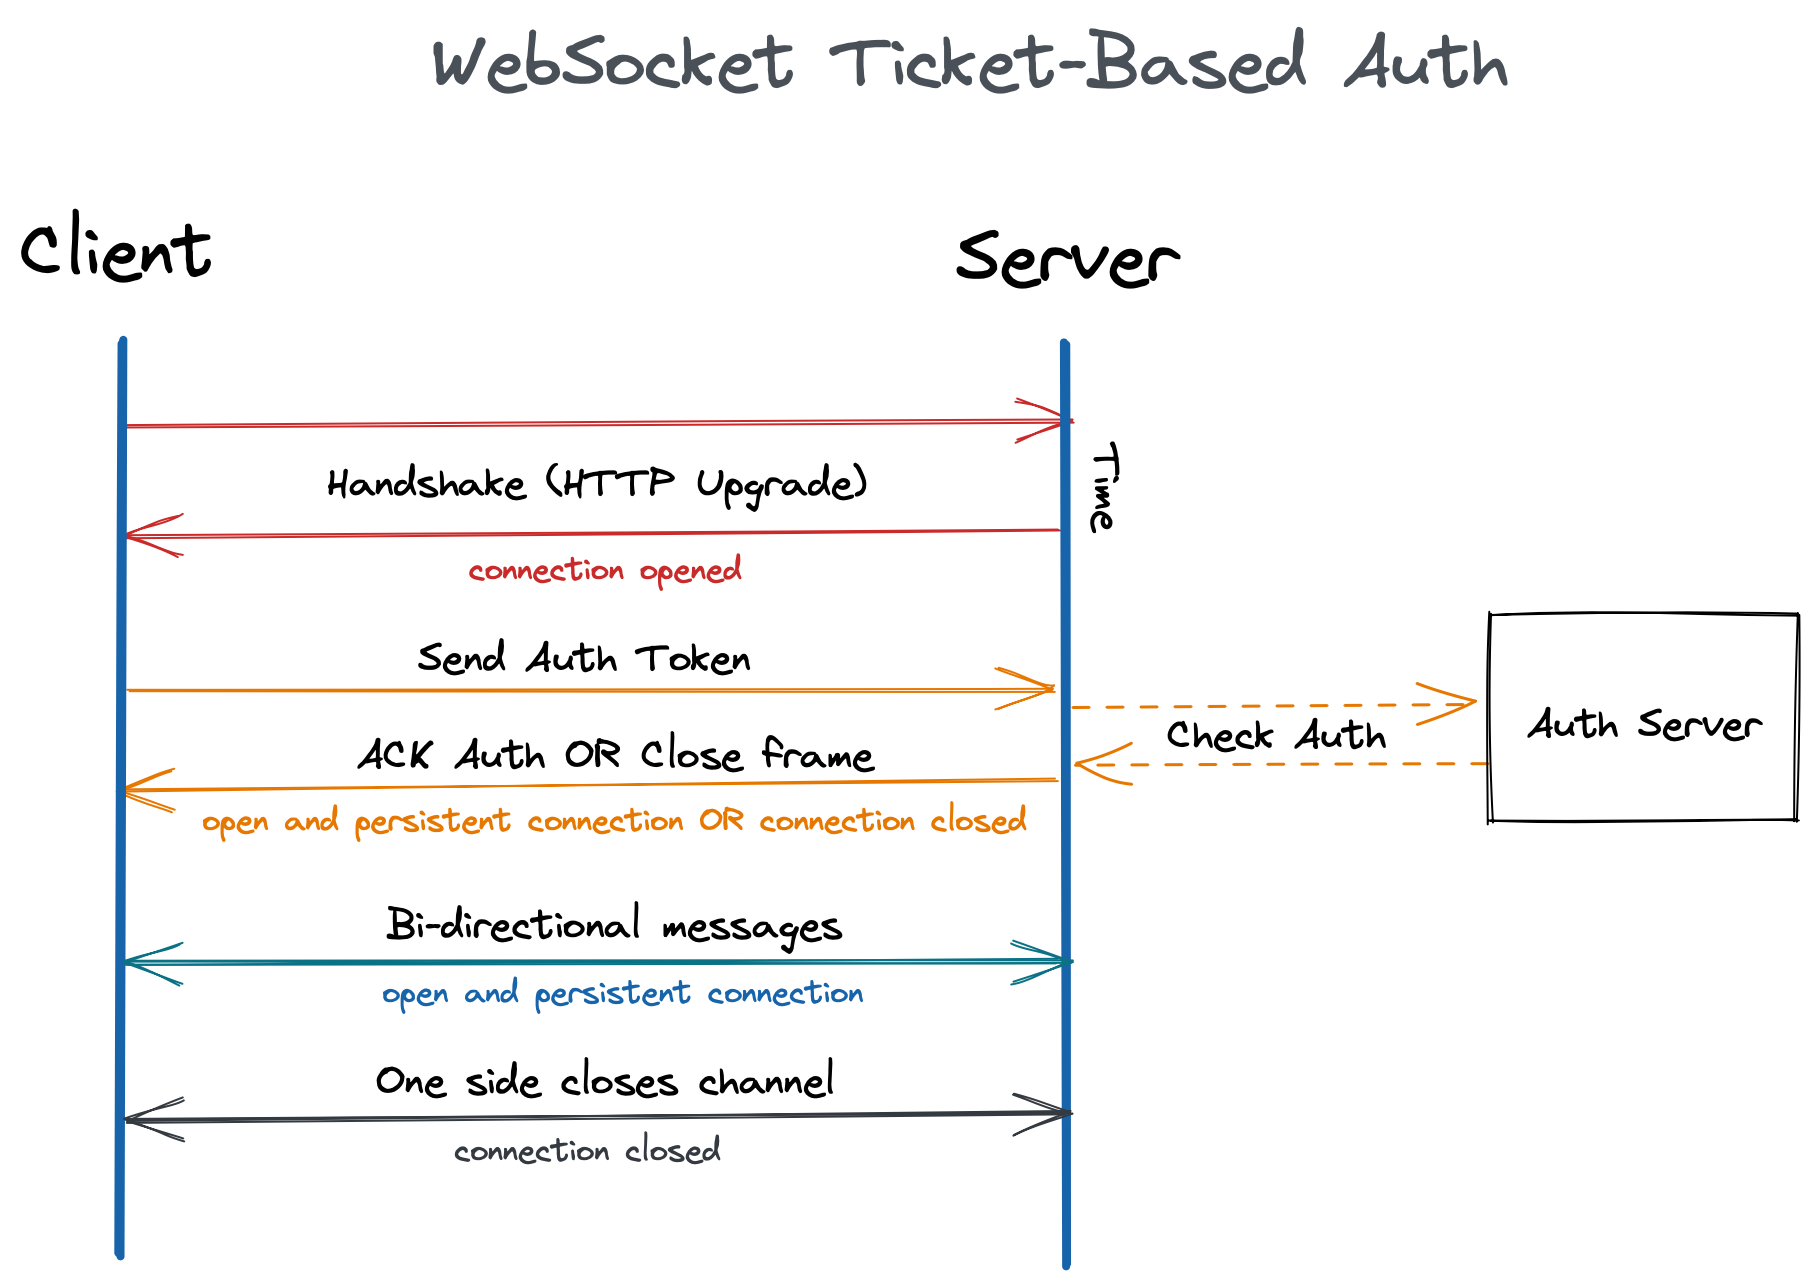 WebSocket Ticket-Based Auth